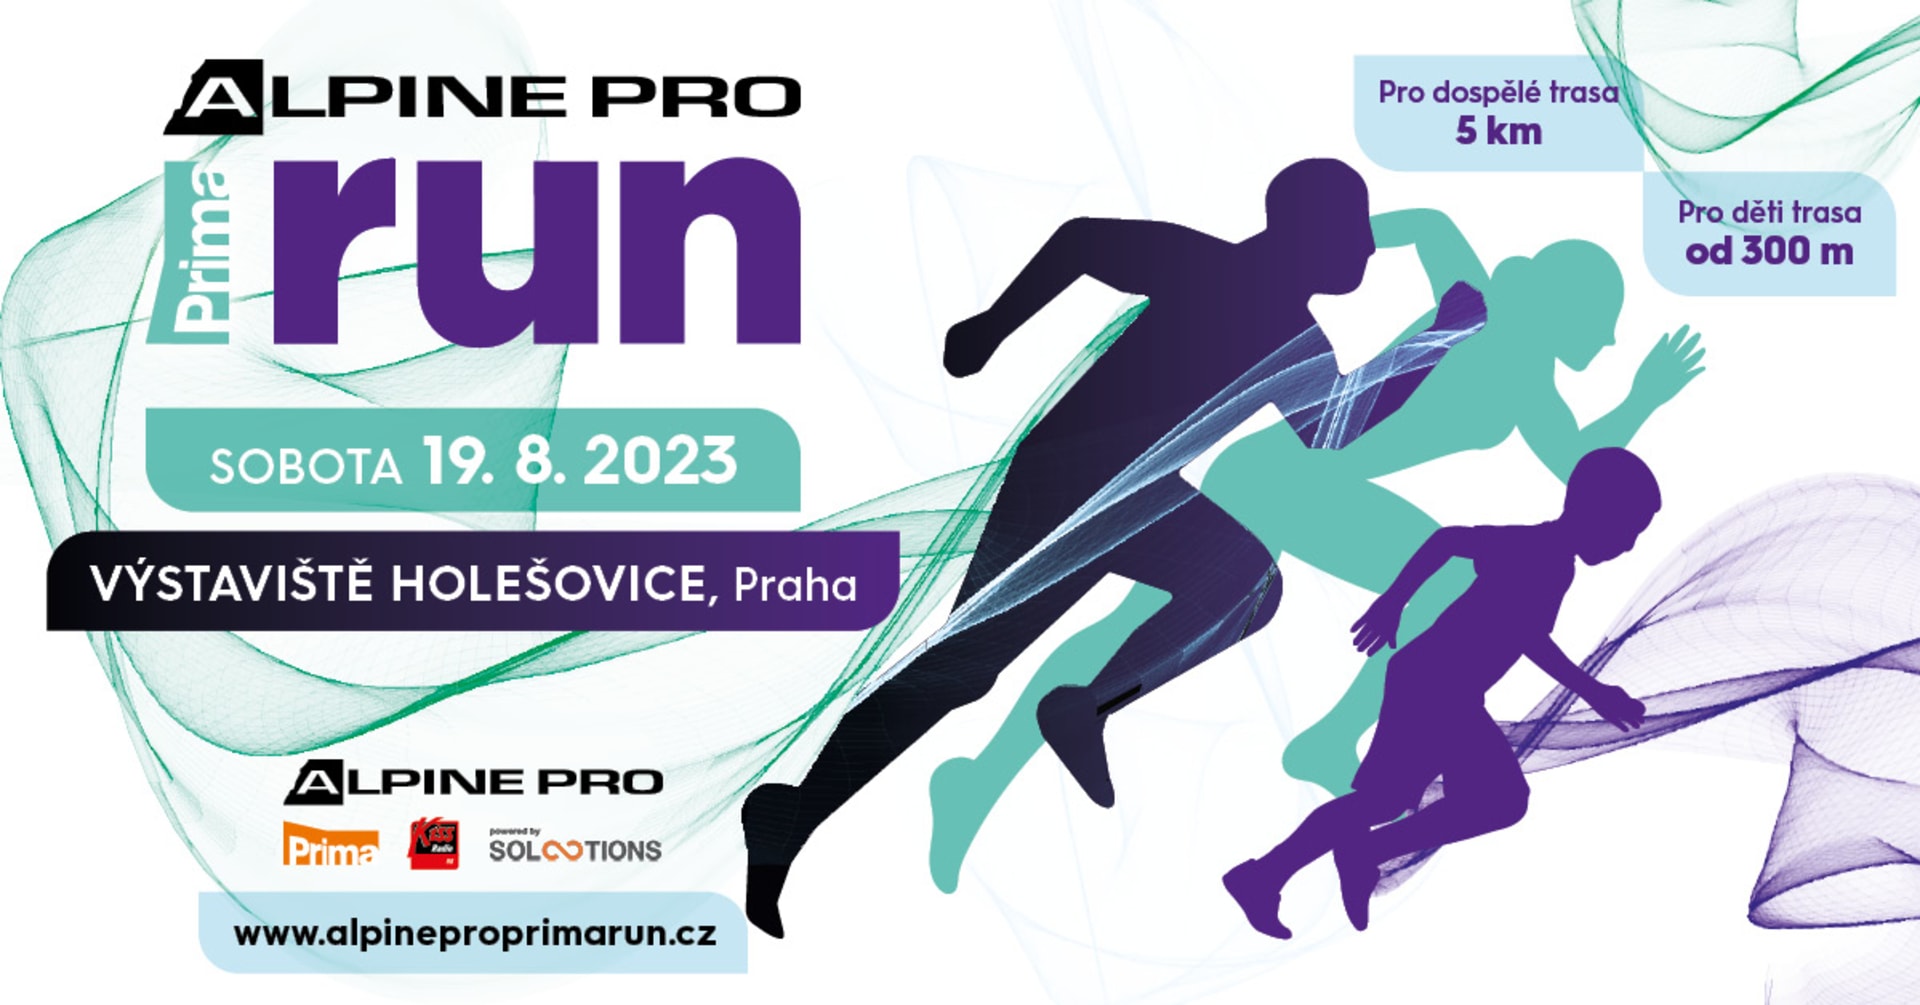 Alpine Pro Prima Run 